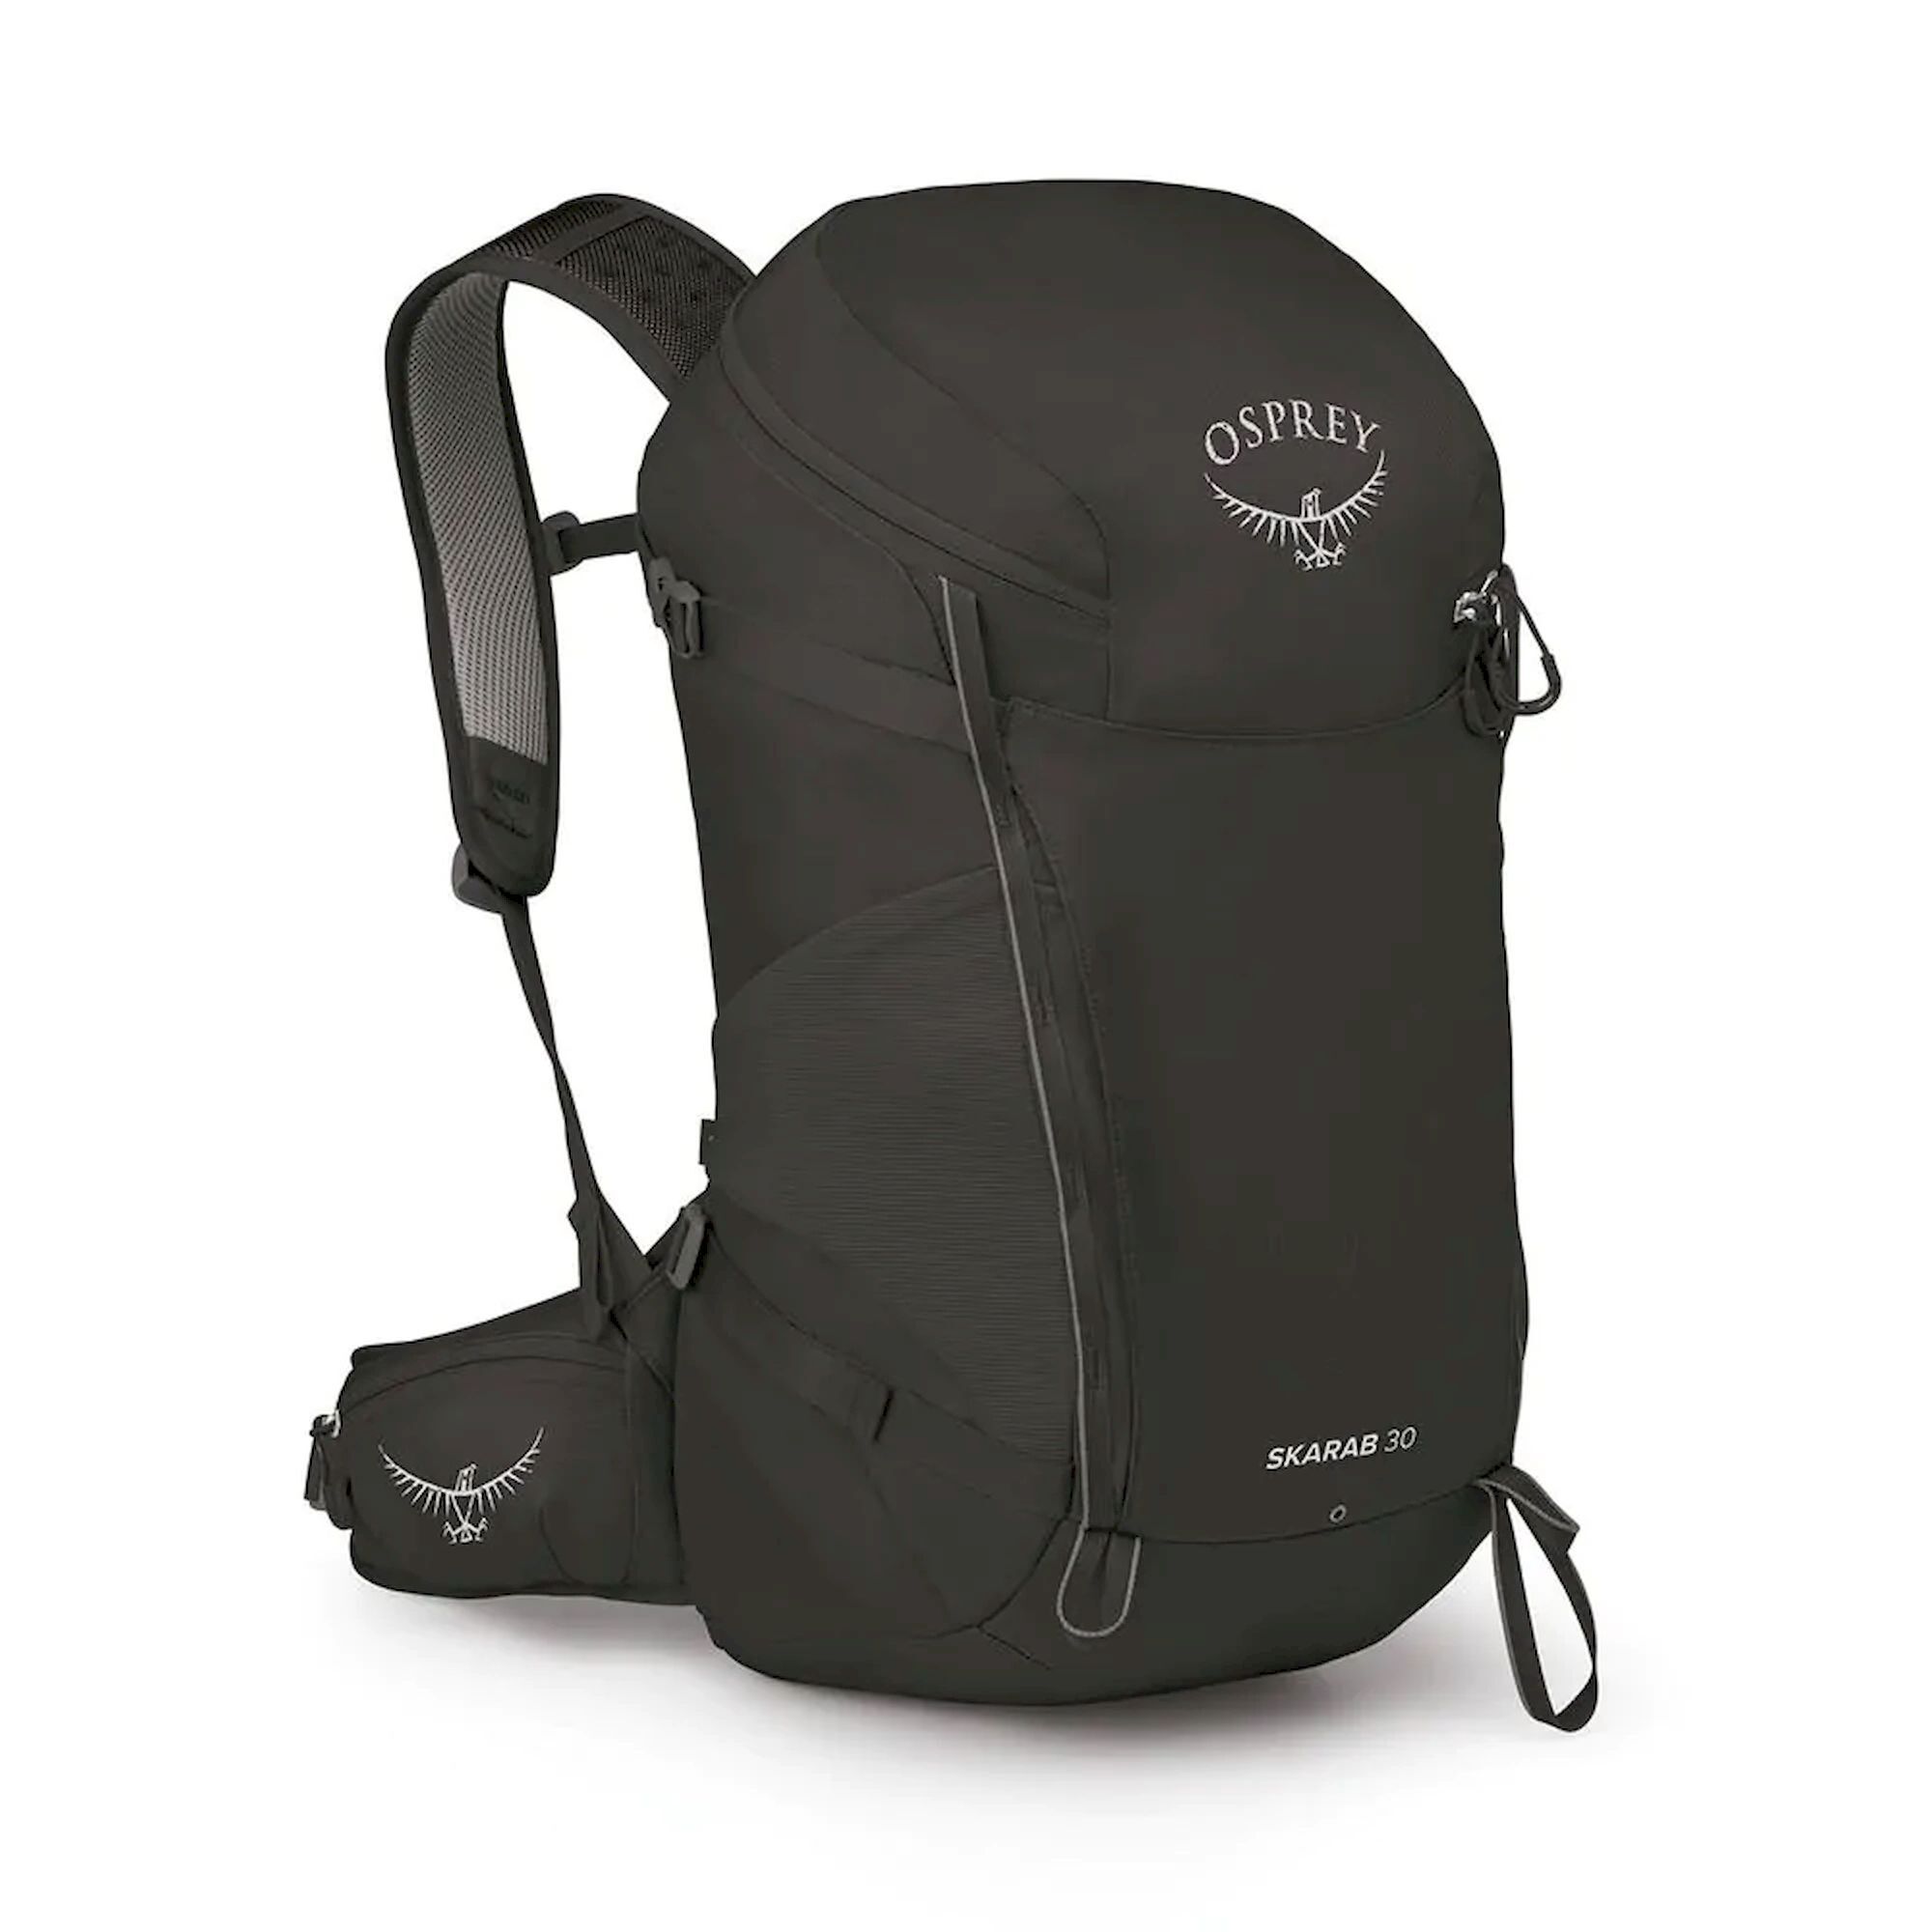 Osprey Skarab 30 - Hiking backpack - Men's